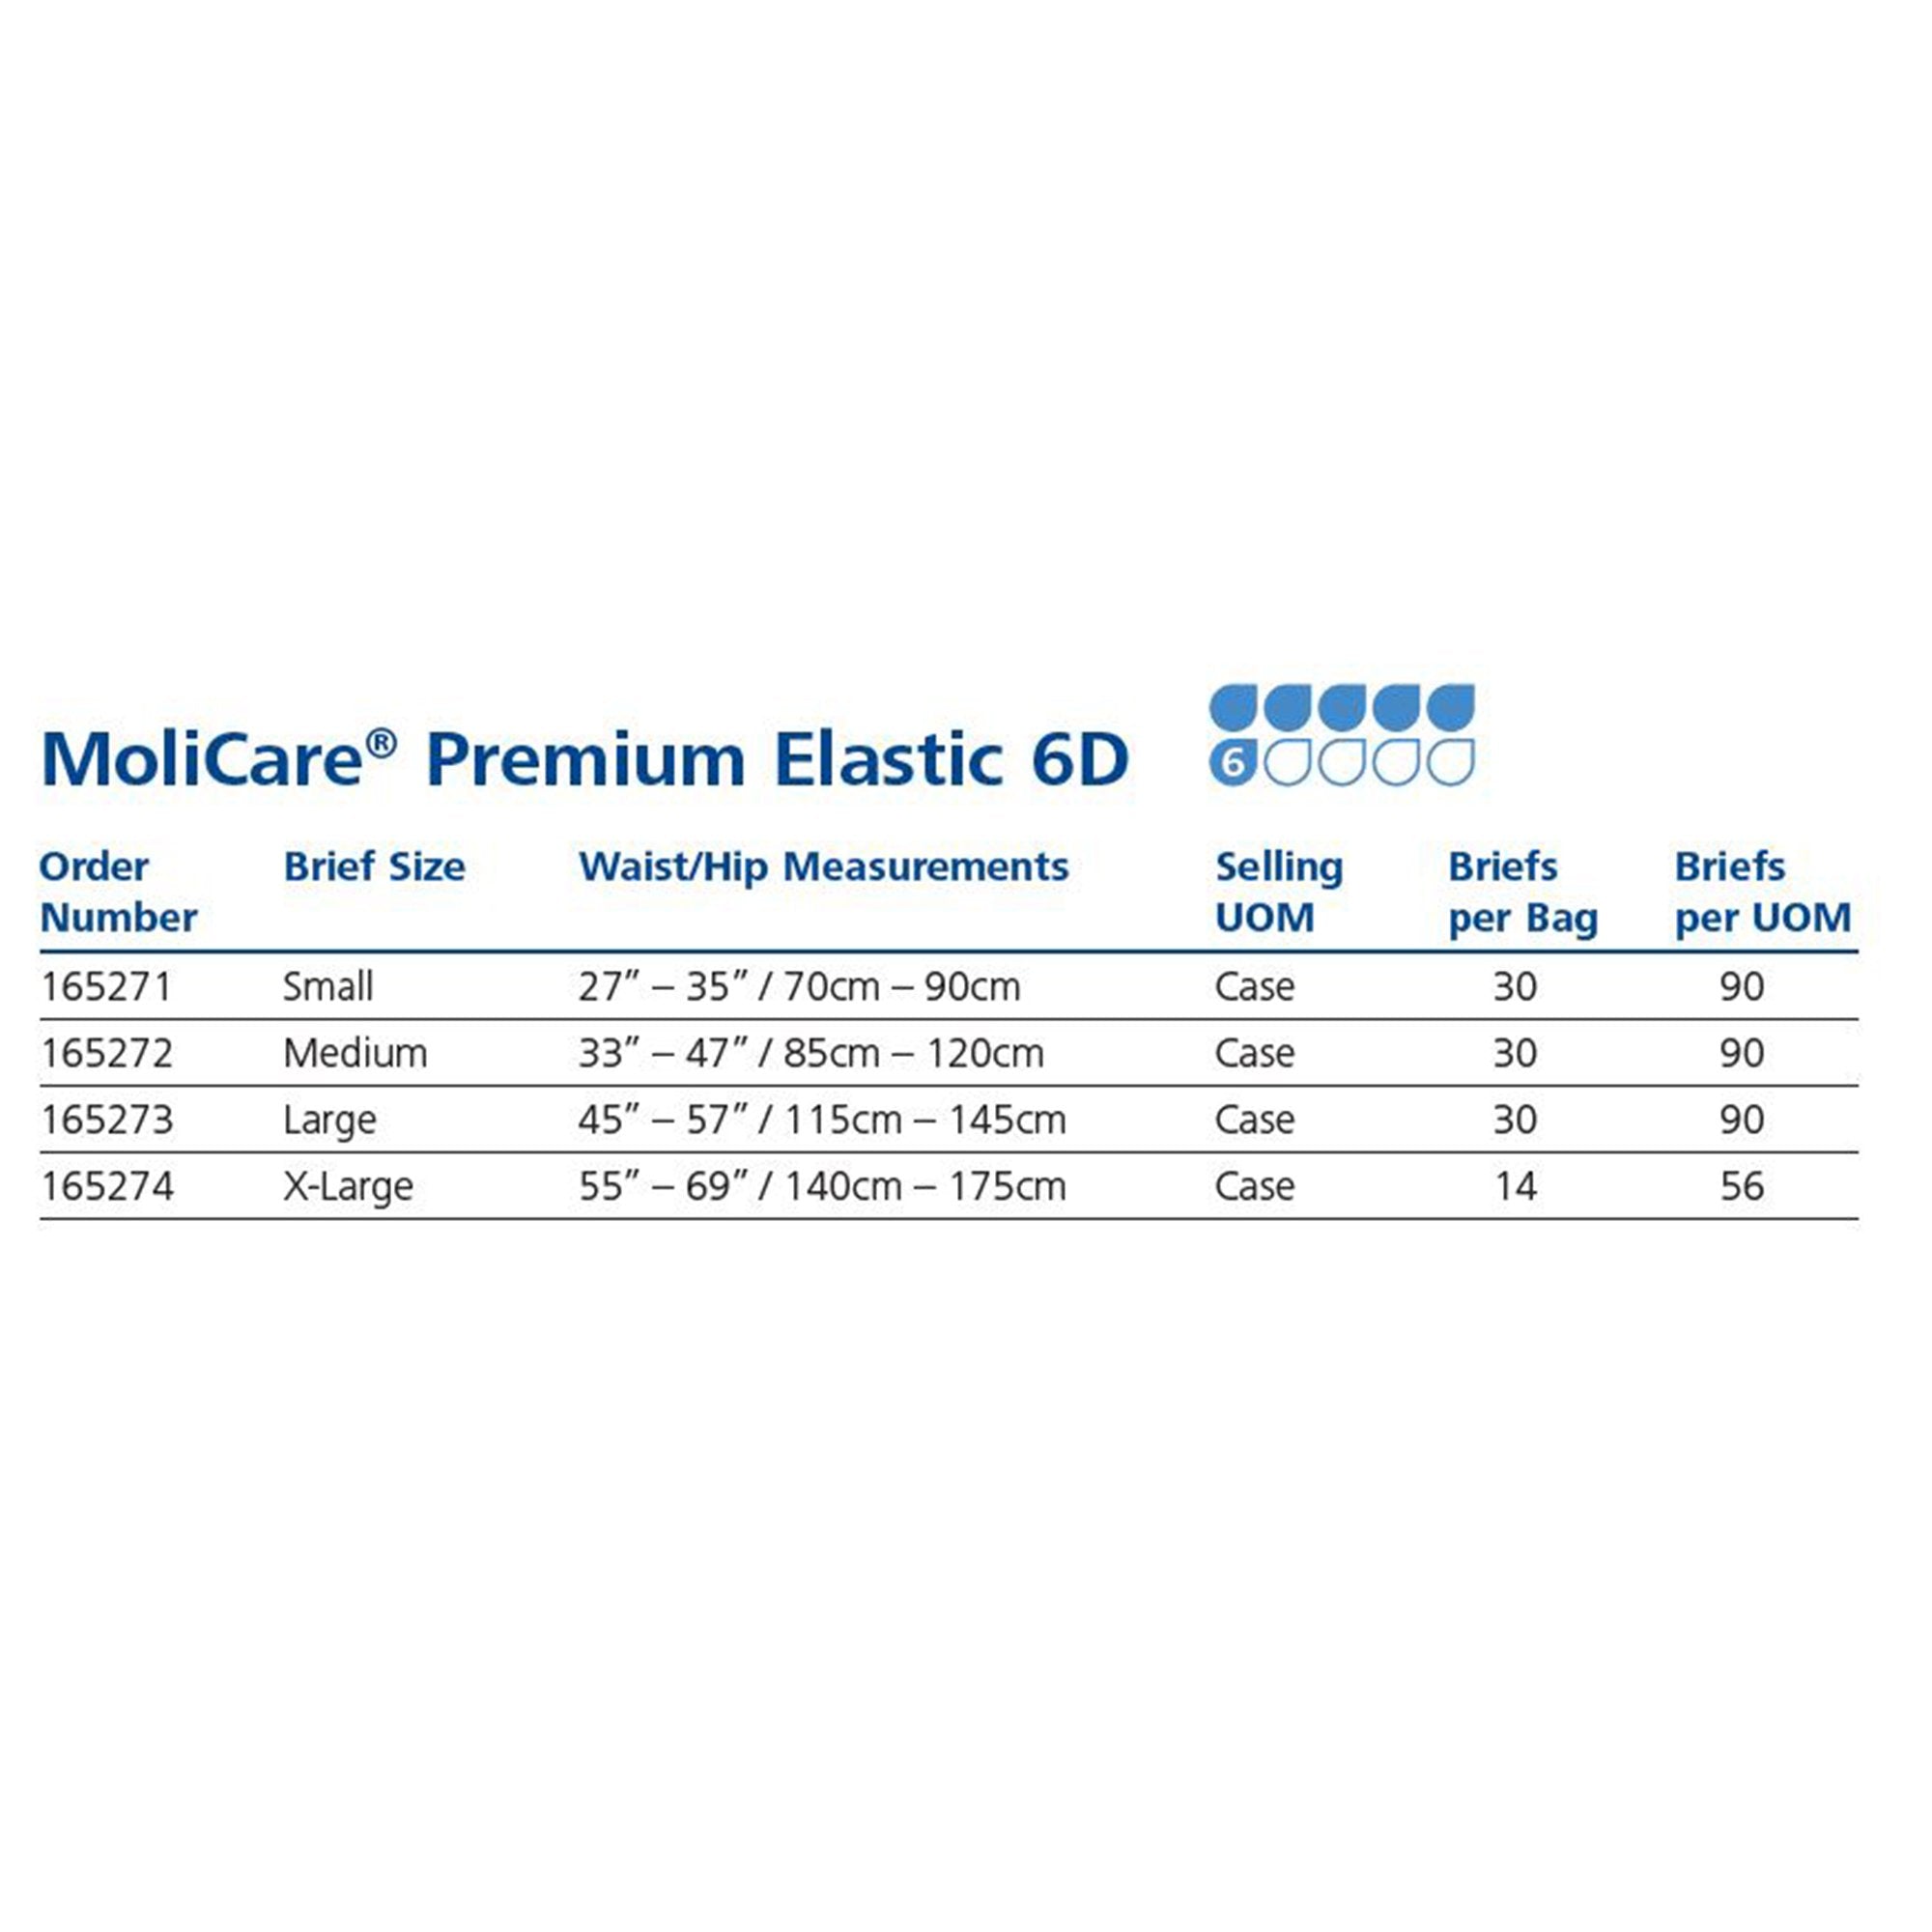 Unisex Adult Incontinence Brief MoliCare Premium Elastic 6D Medium Disposable Moderate Absorbency